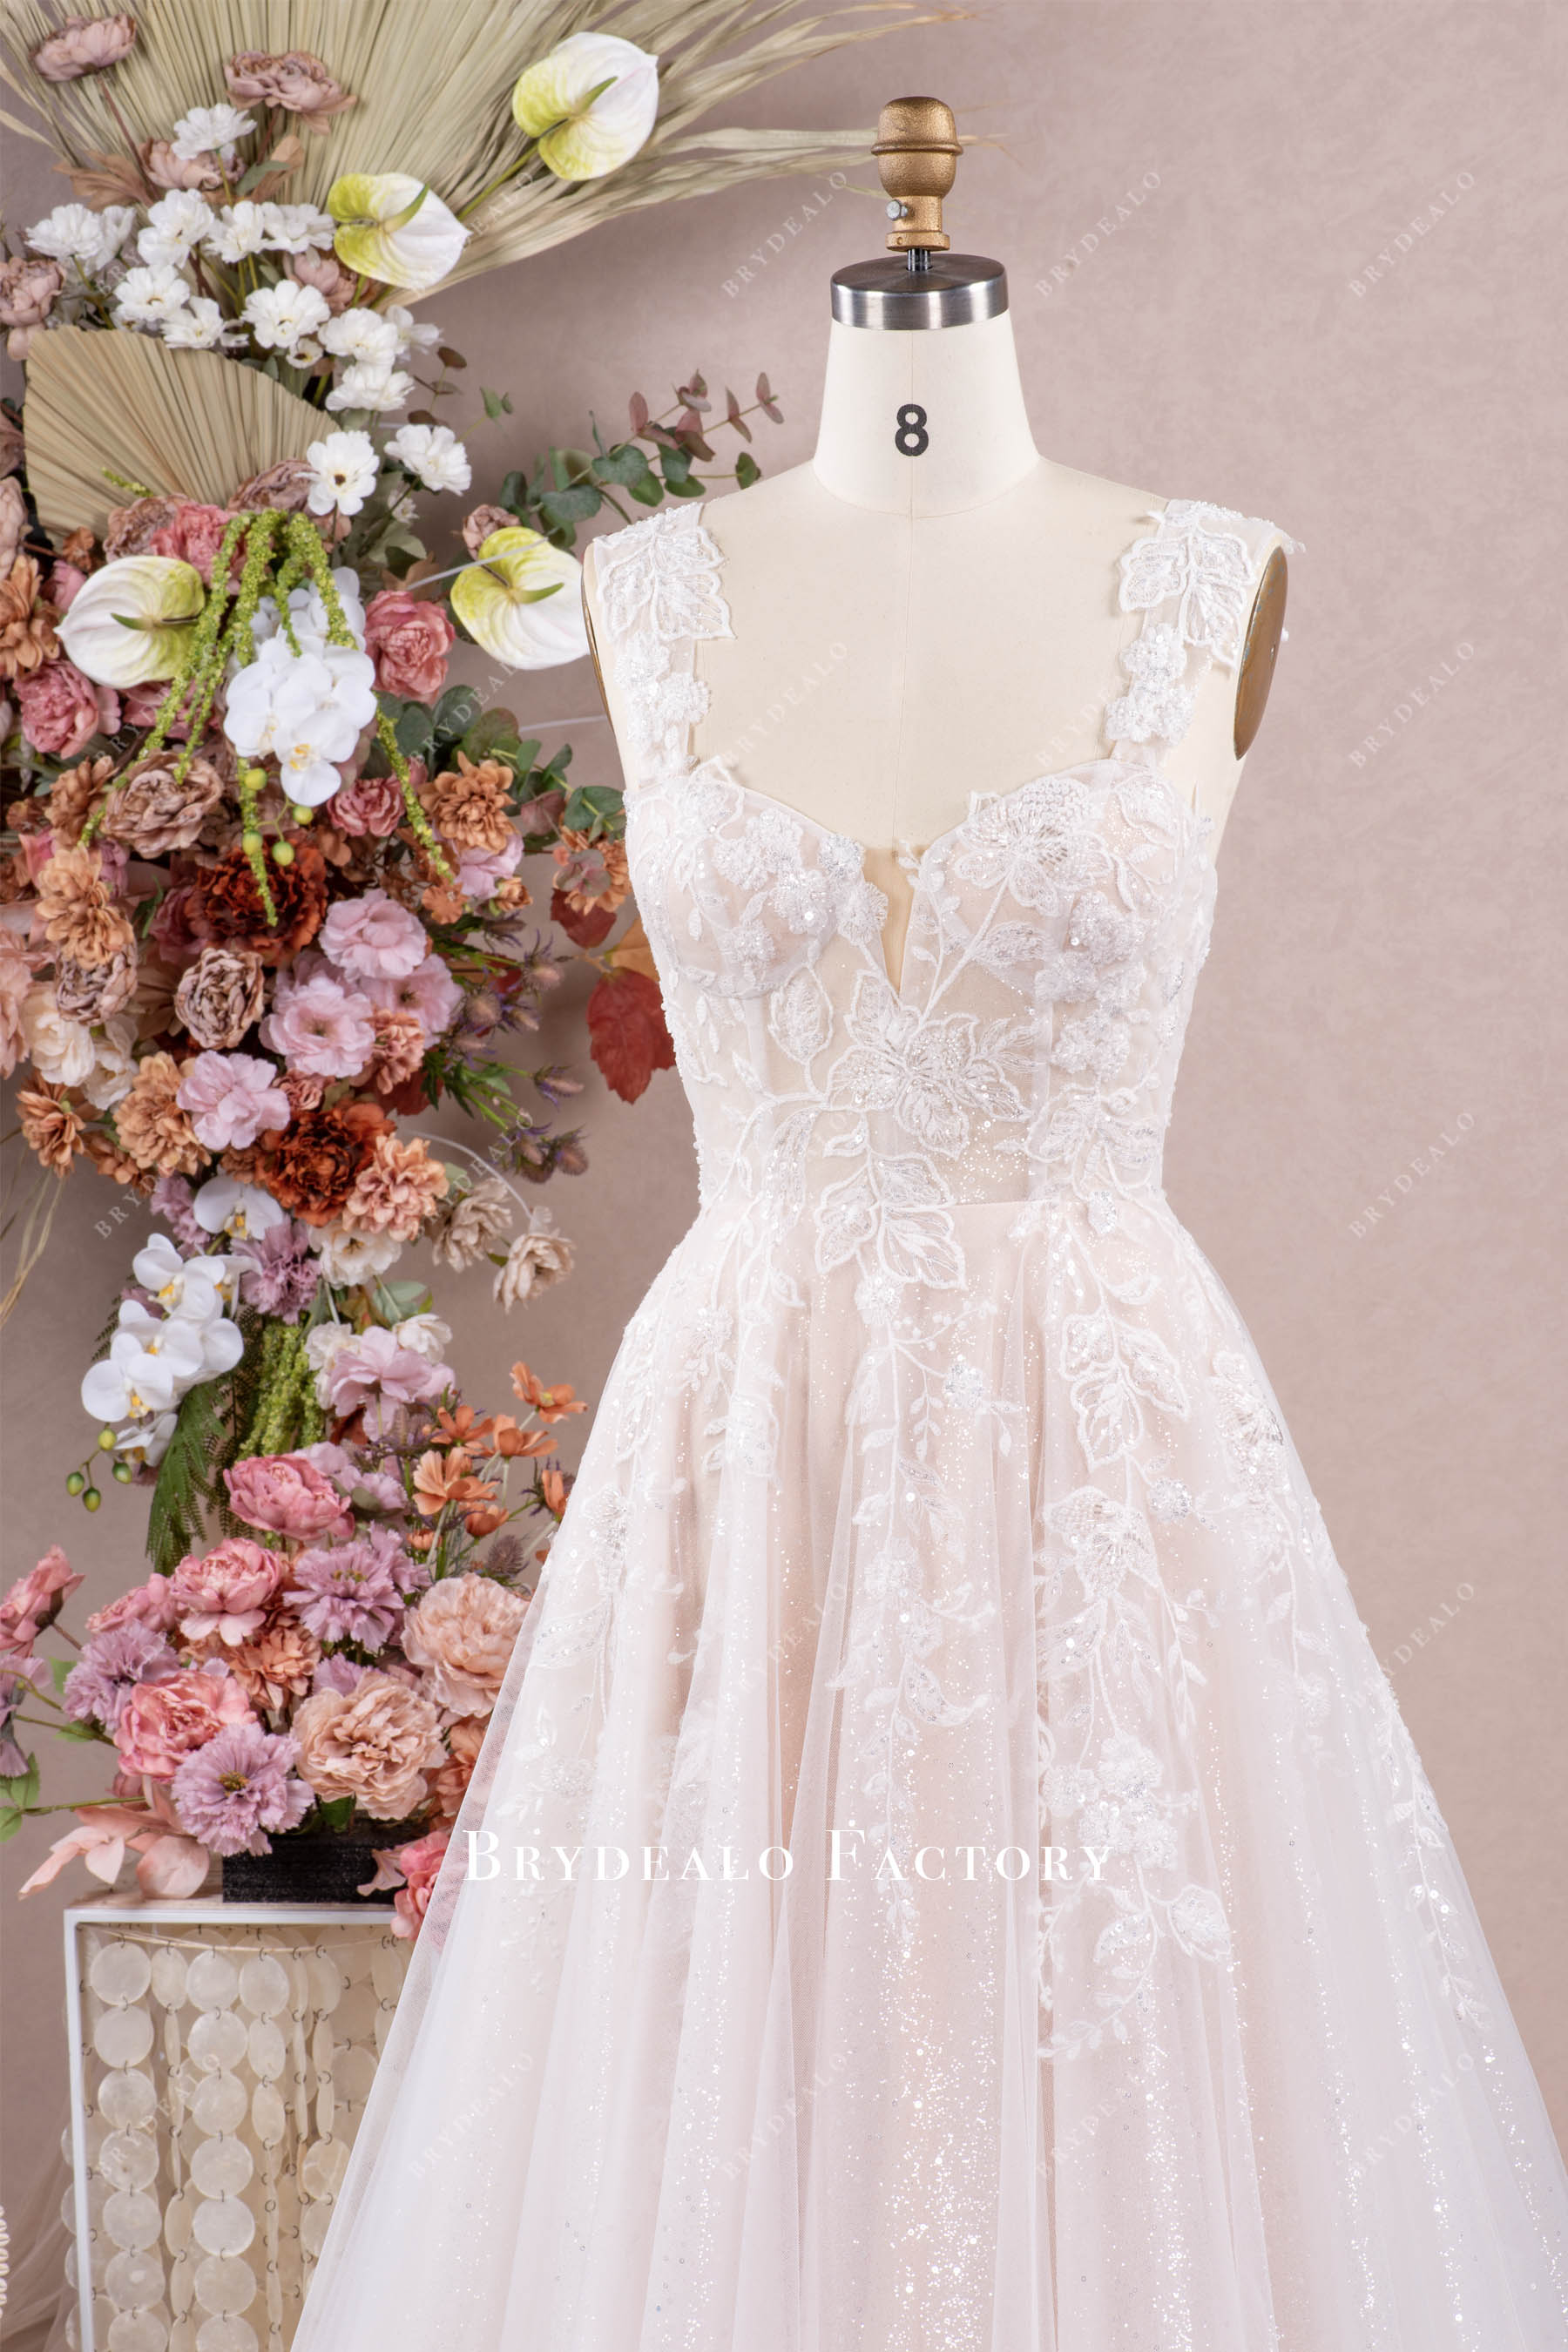 sparkly sweetheart wedding dress